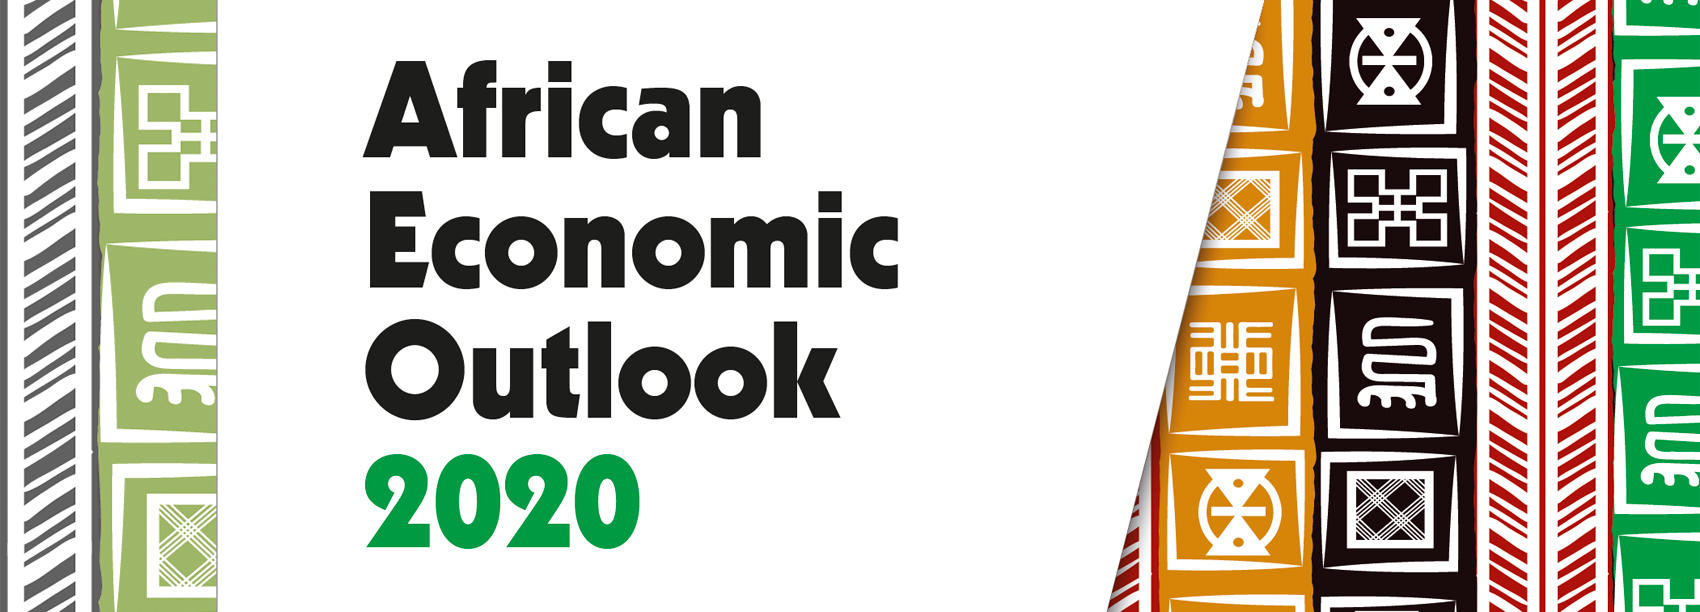 Africa Economic Outlook